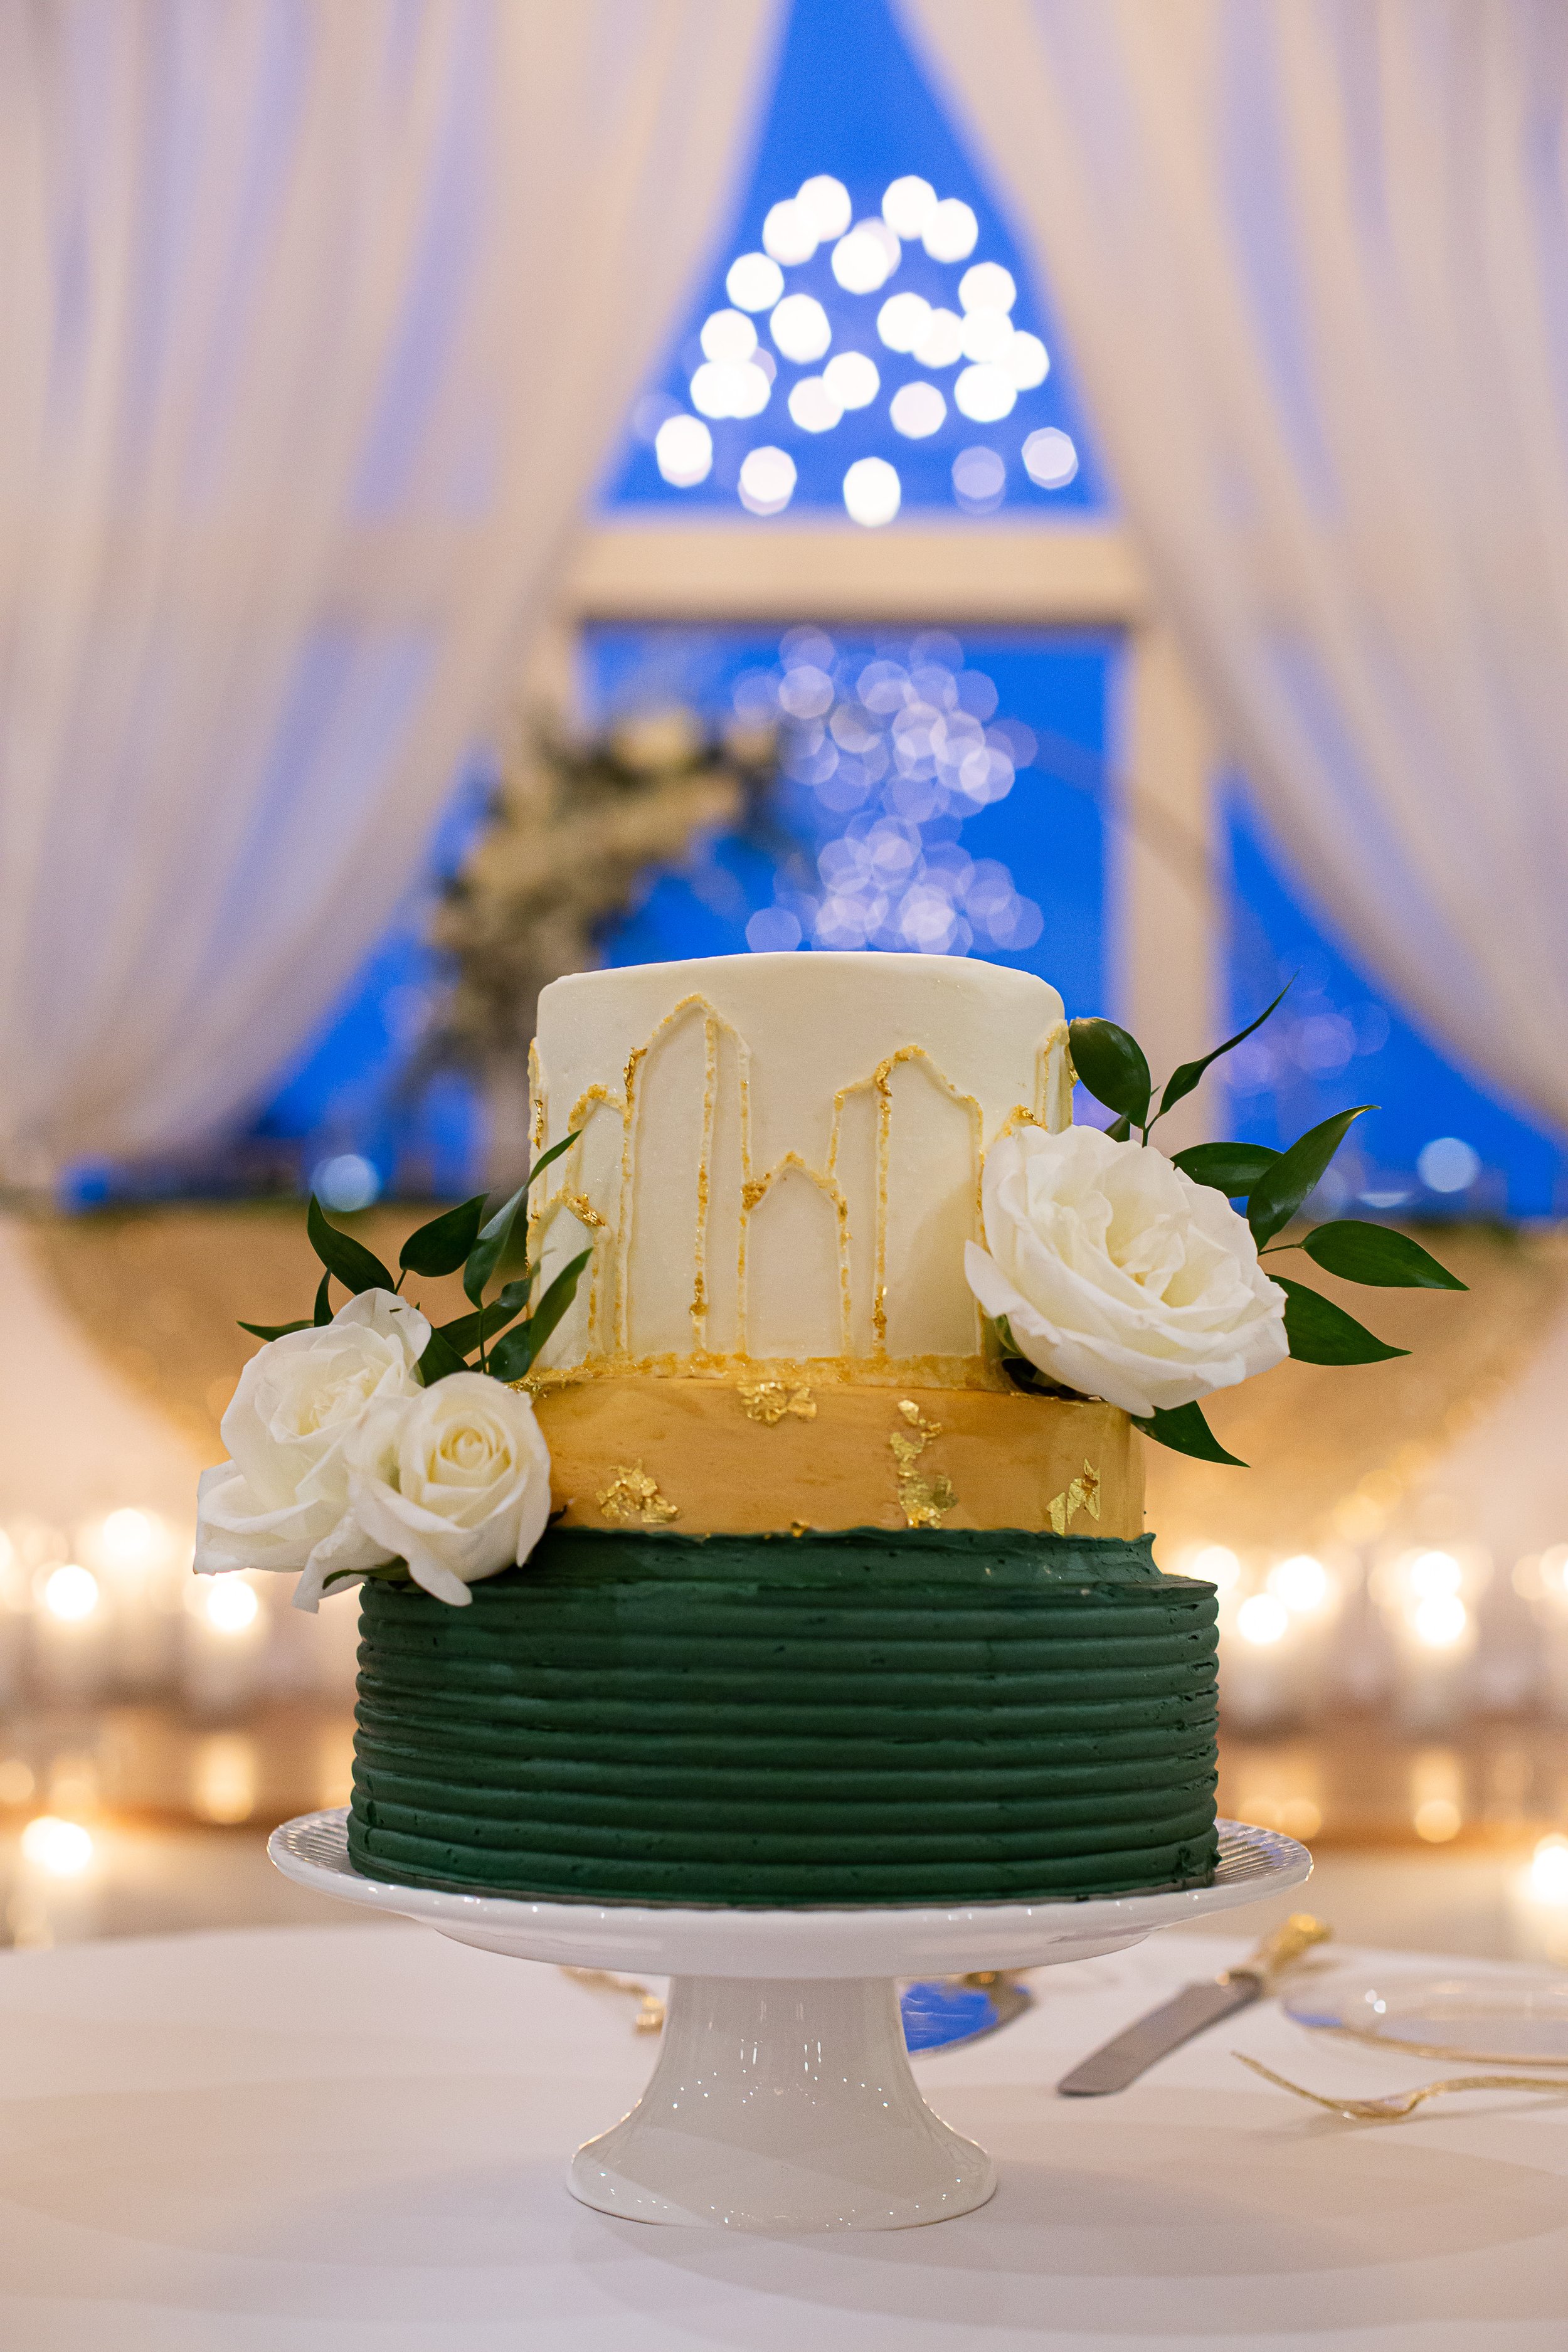 Winter wonderland Wedding cake Missouri Venue Emerson Fields columbia mo.jpg